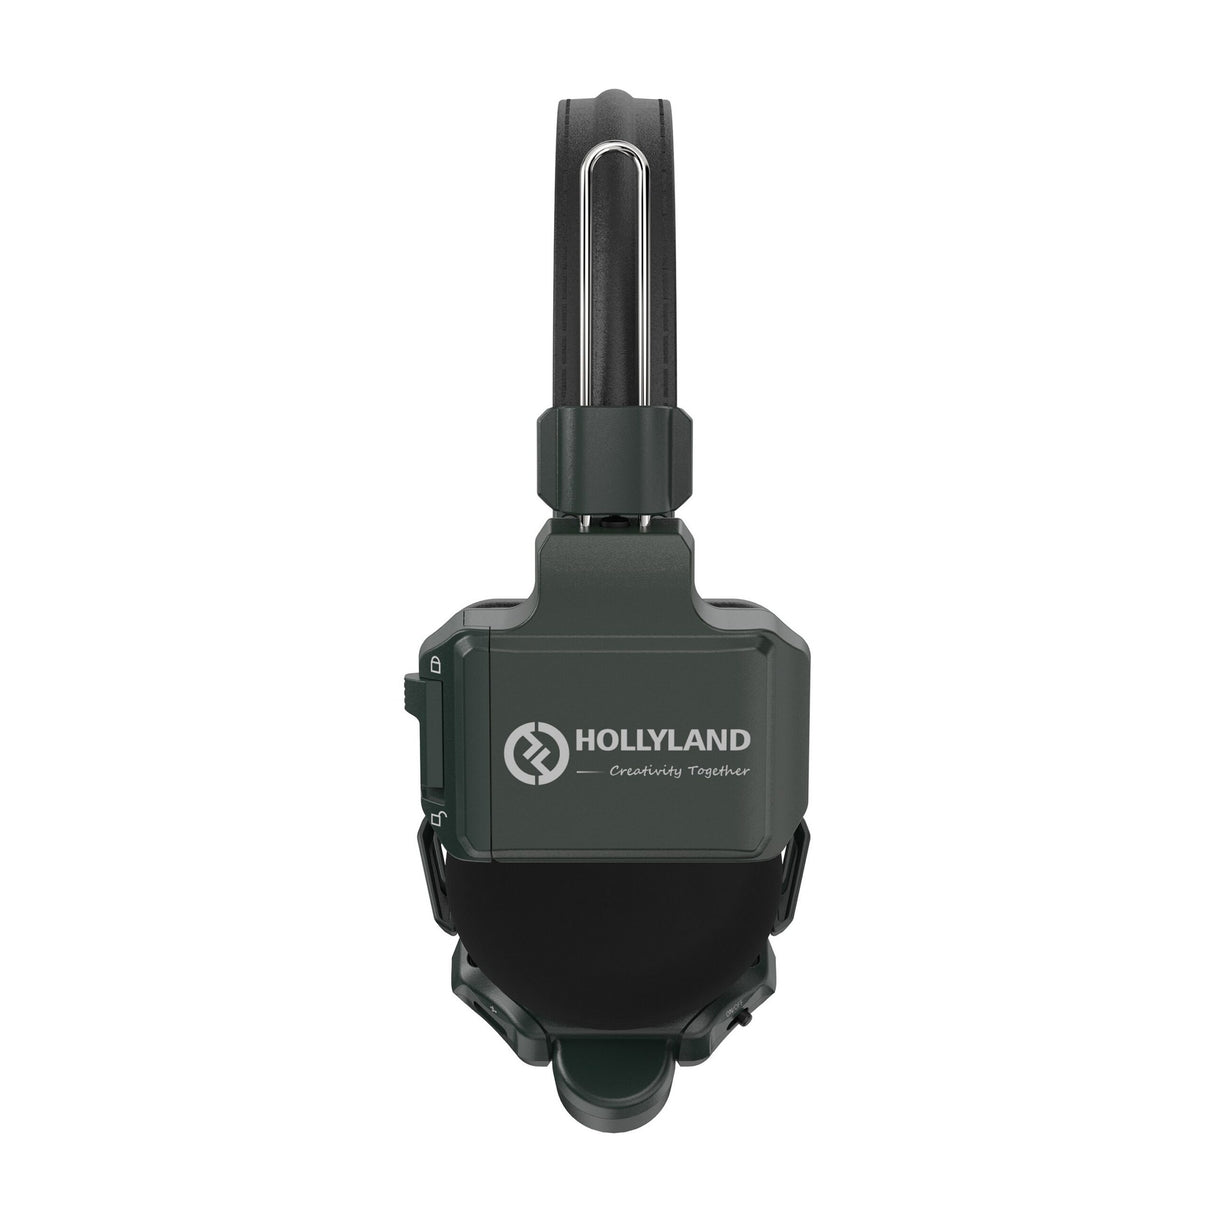 Hollyland Solidcom C1 Full Duplex Wireless Intercom System with 6 Headsets